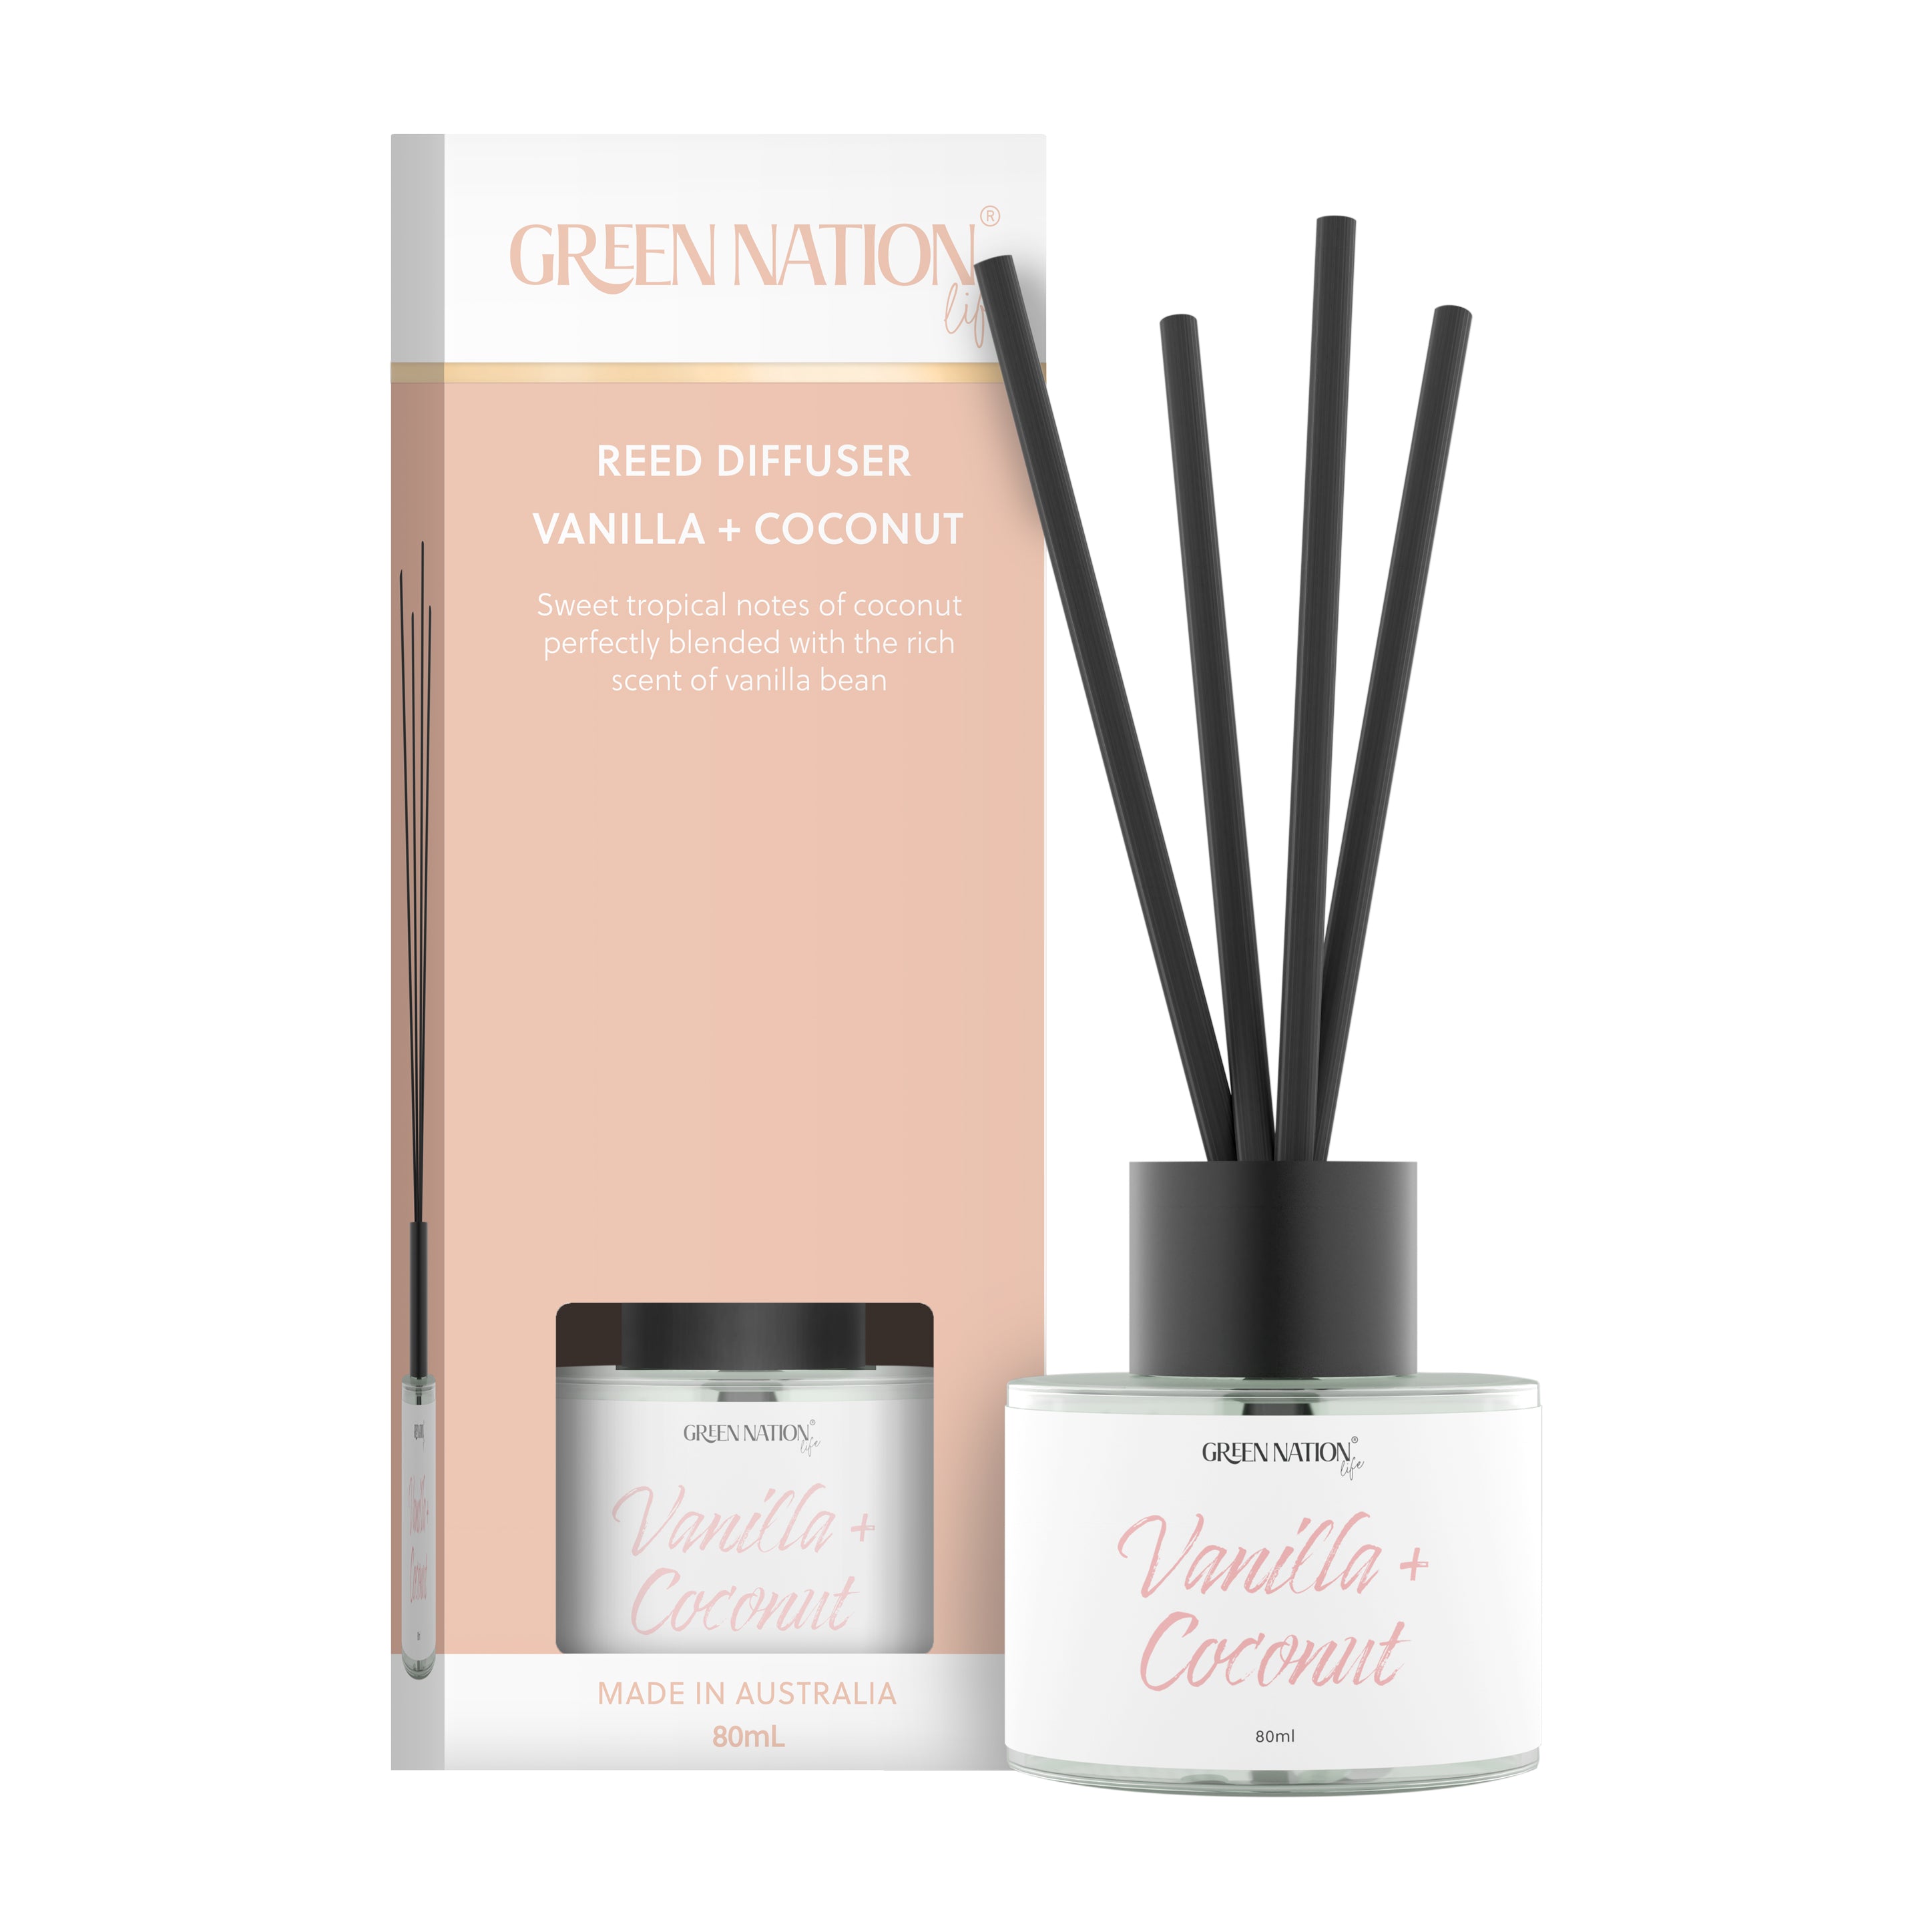 Luxurious scented diffuser 80ml - Vanilla + Coconut